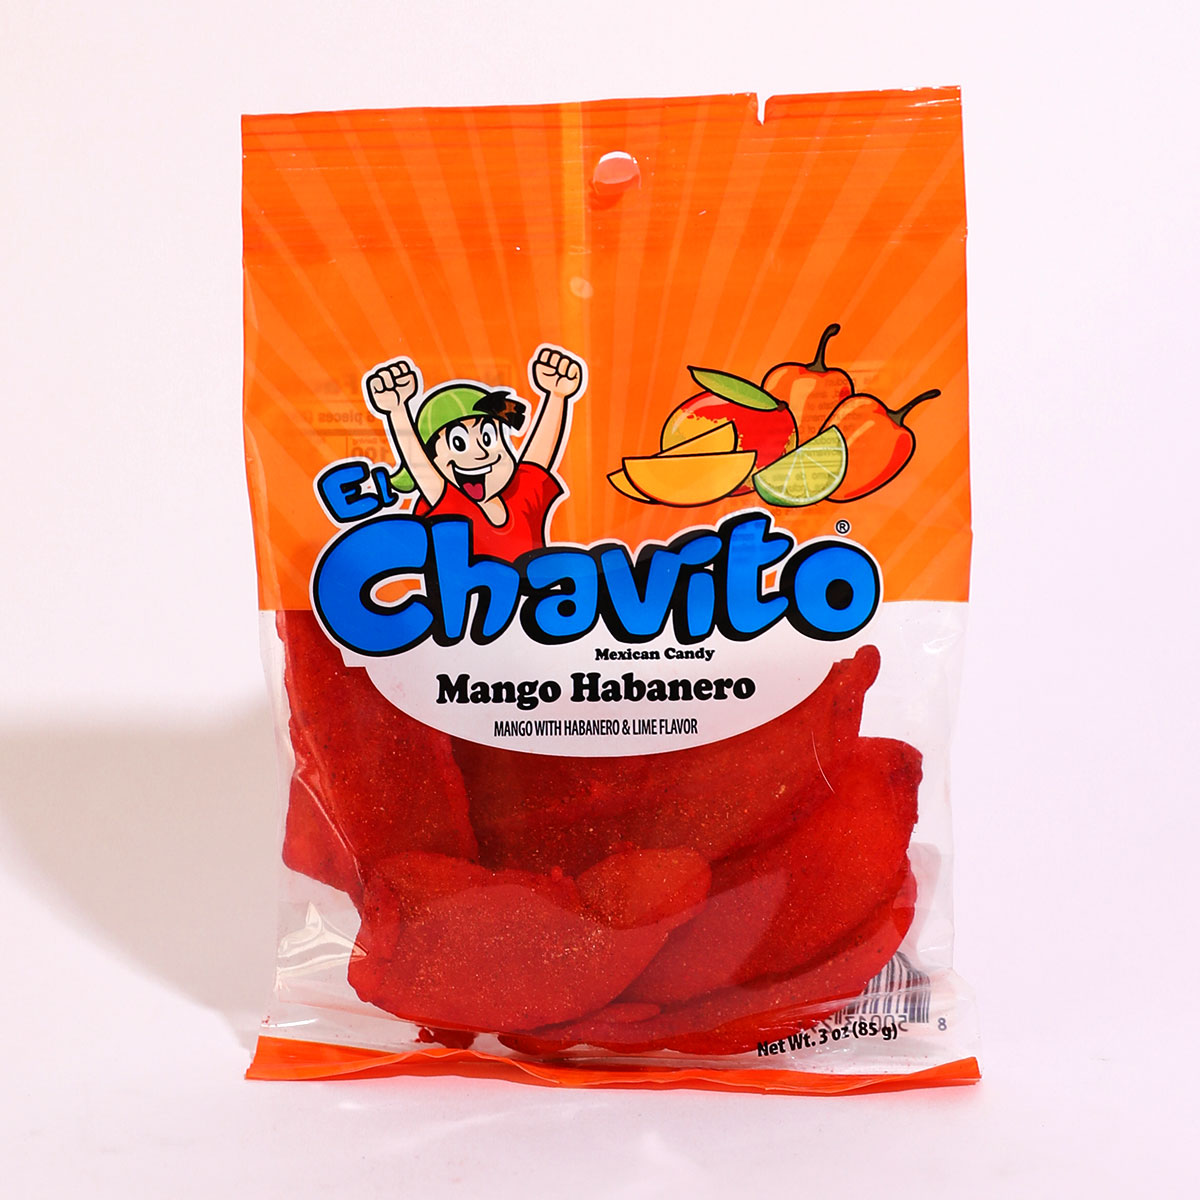 El Chavito: Mango Habanero